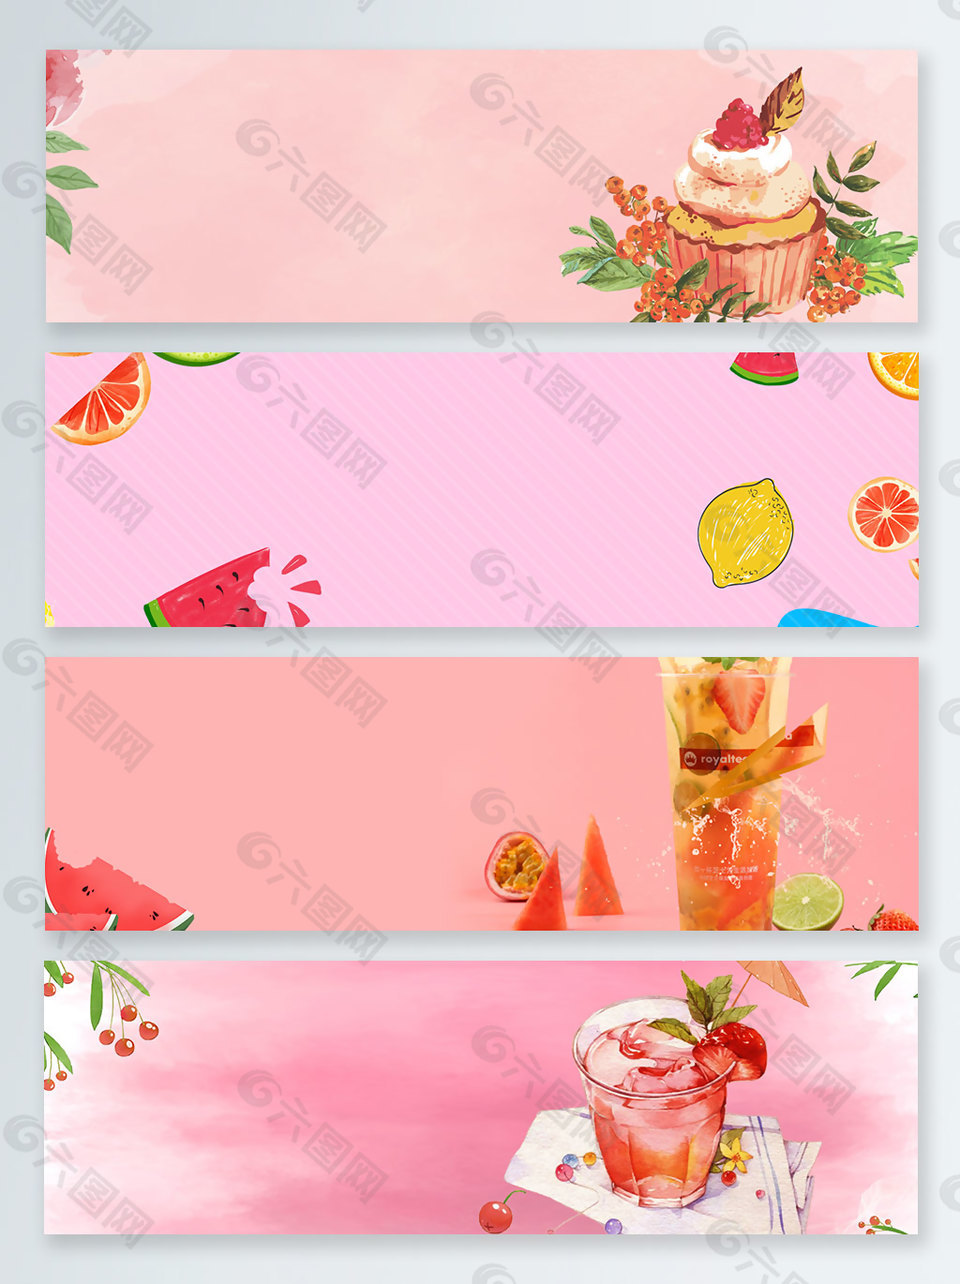 粉色可爱风格健康食物banner背景